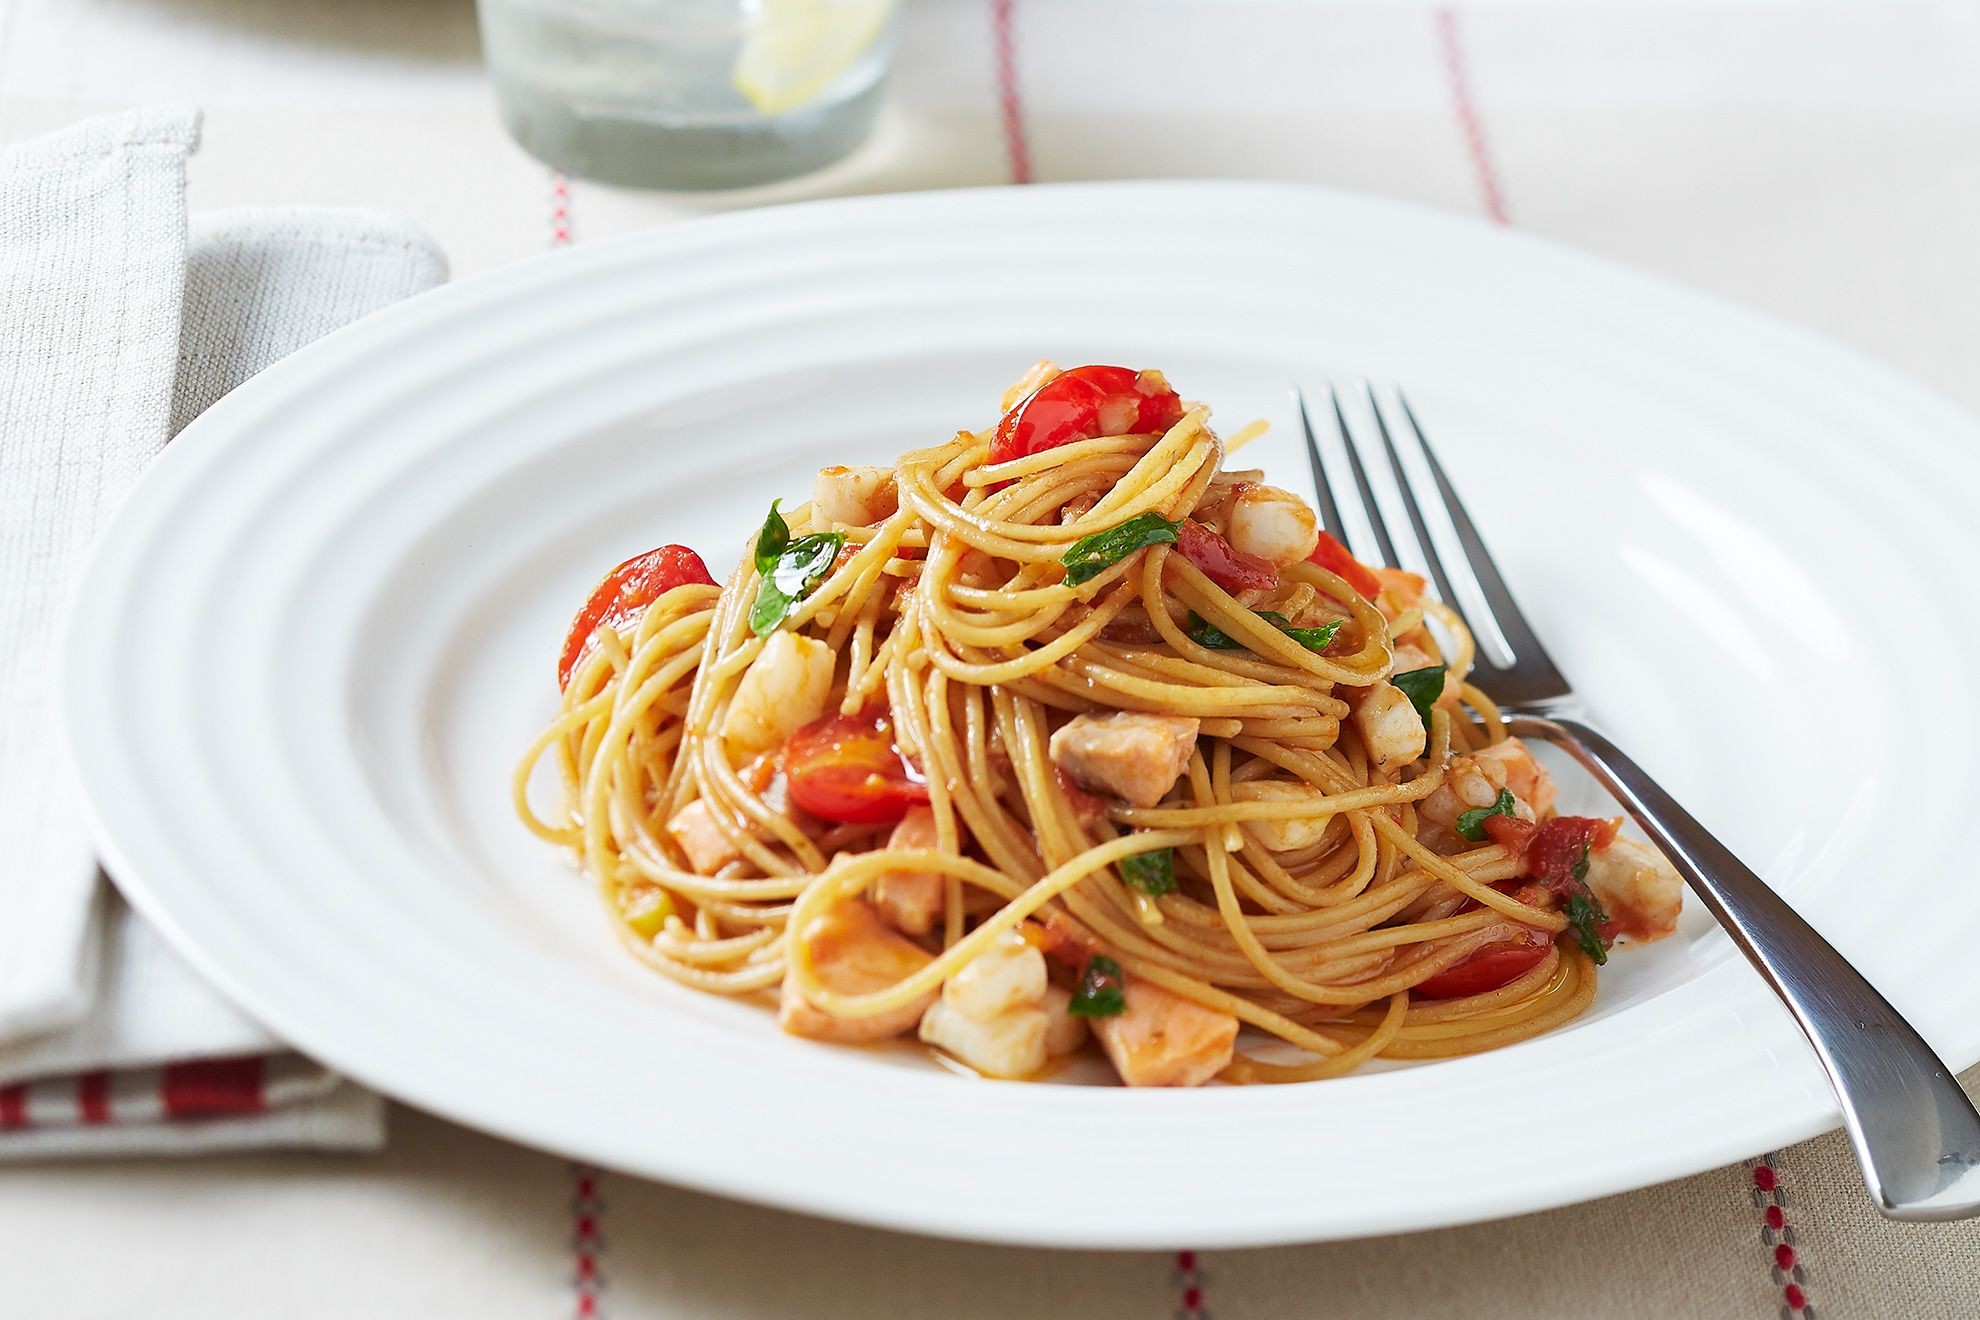 Wholegrain spaghetti with seafood and arrabbiata sauce